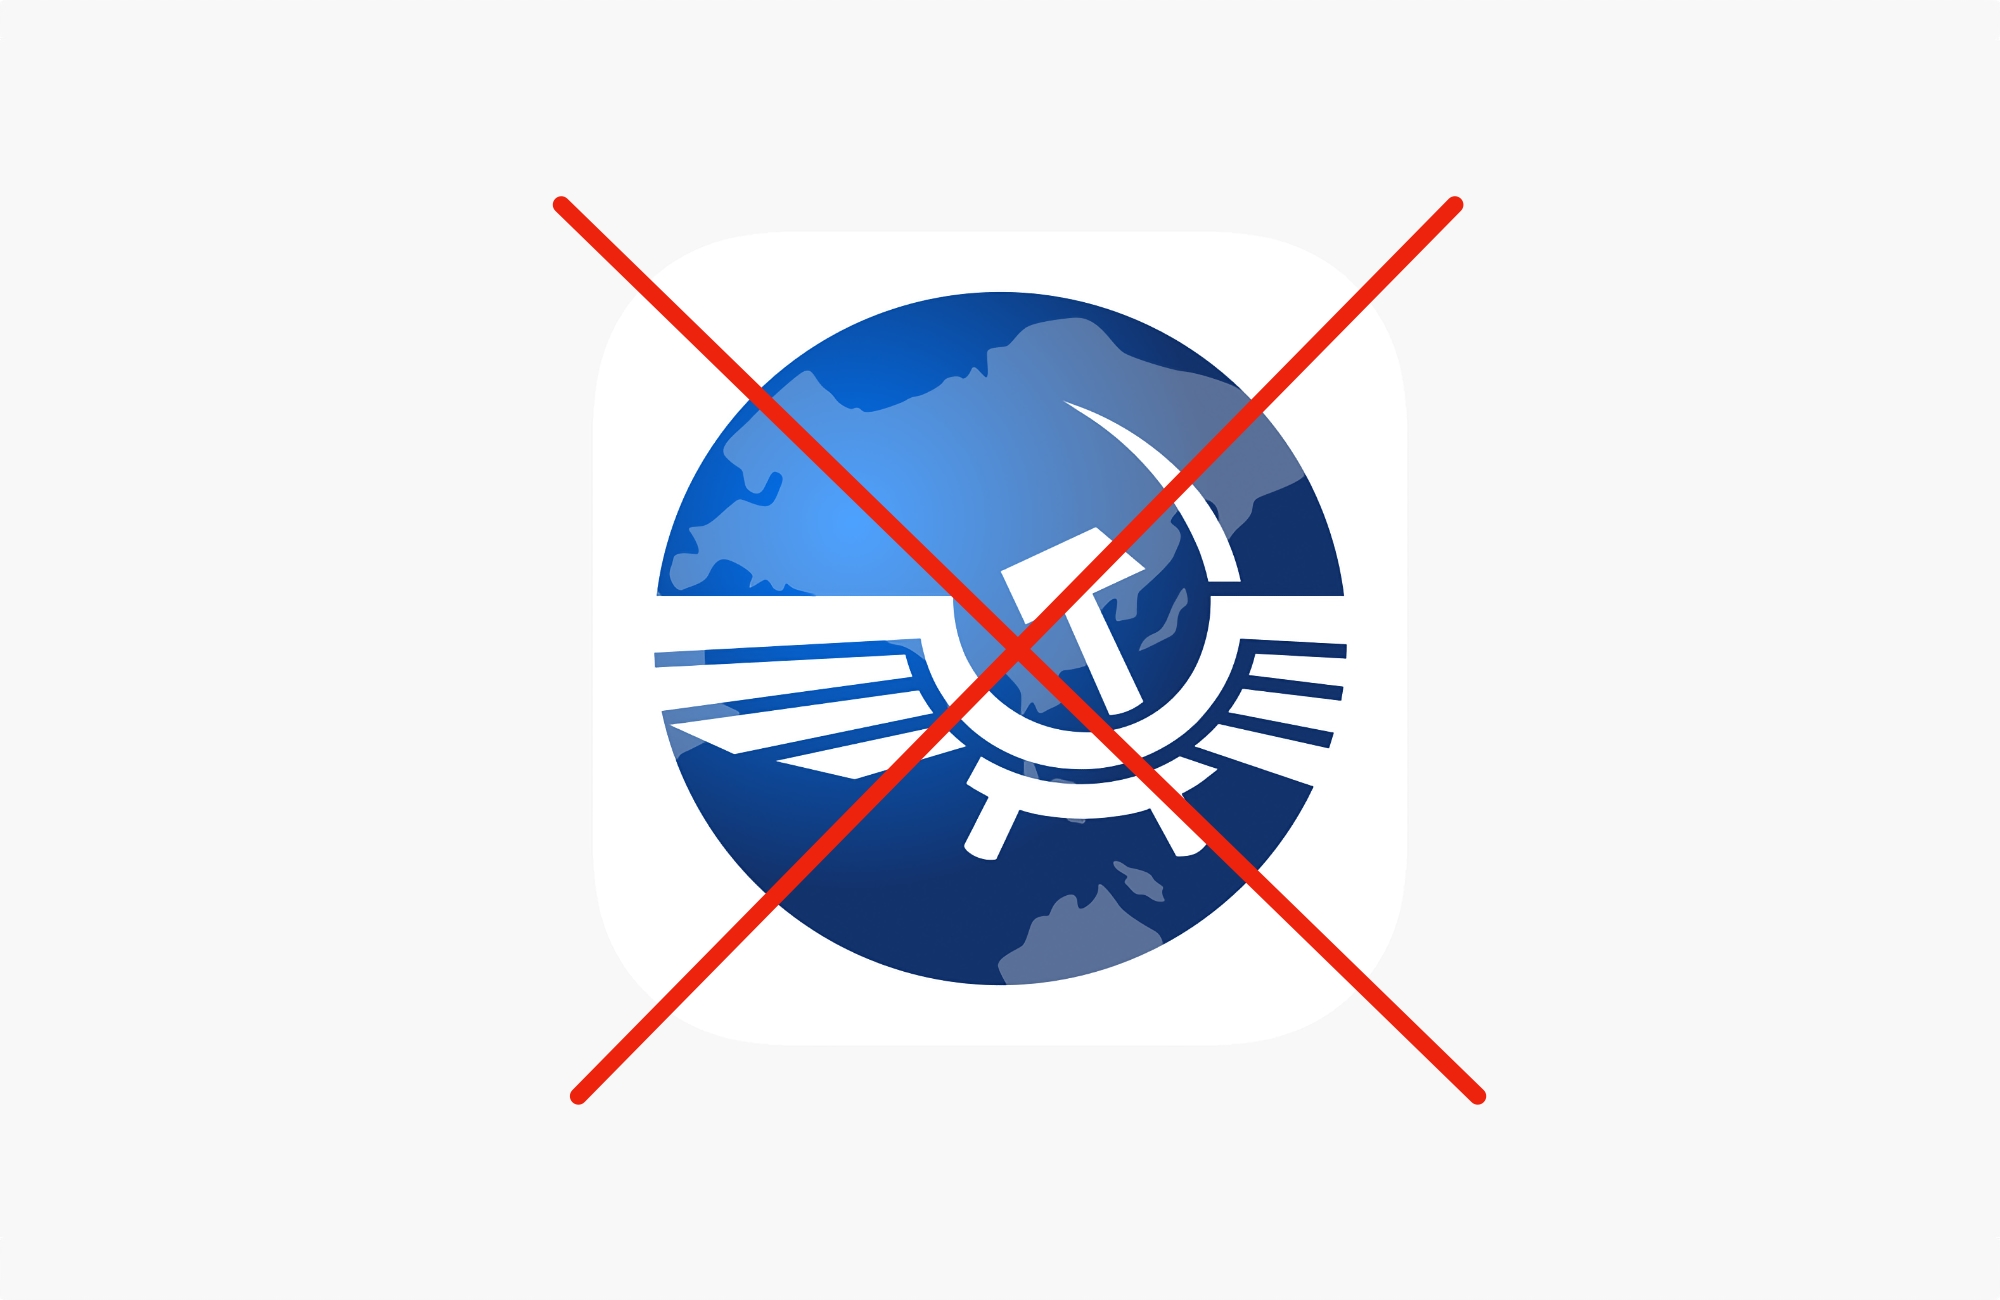 Apple usuwa aplikacje Aeroflot i Utair z App Store